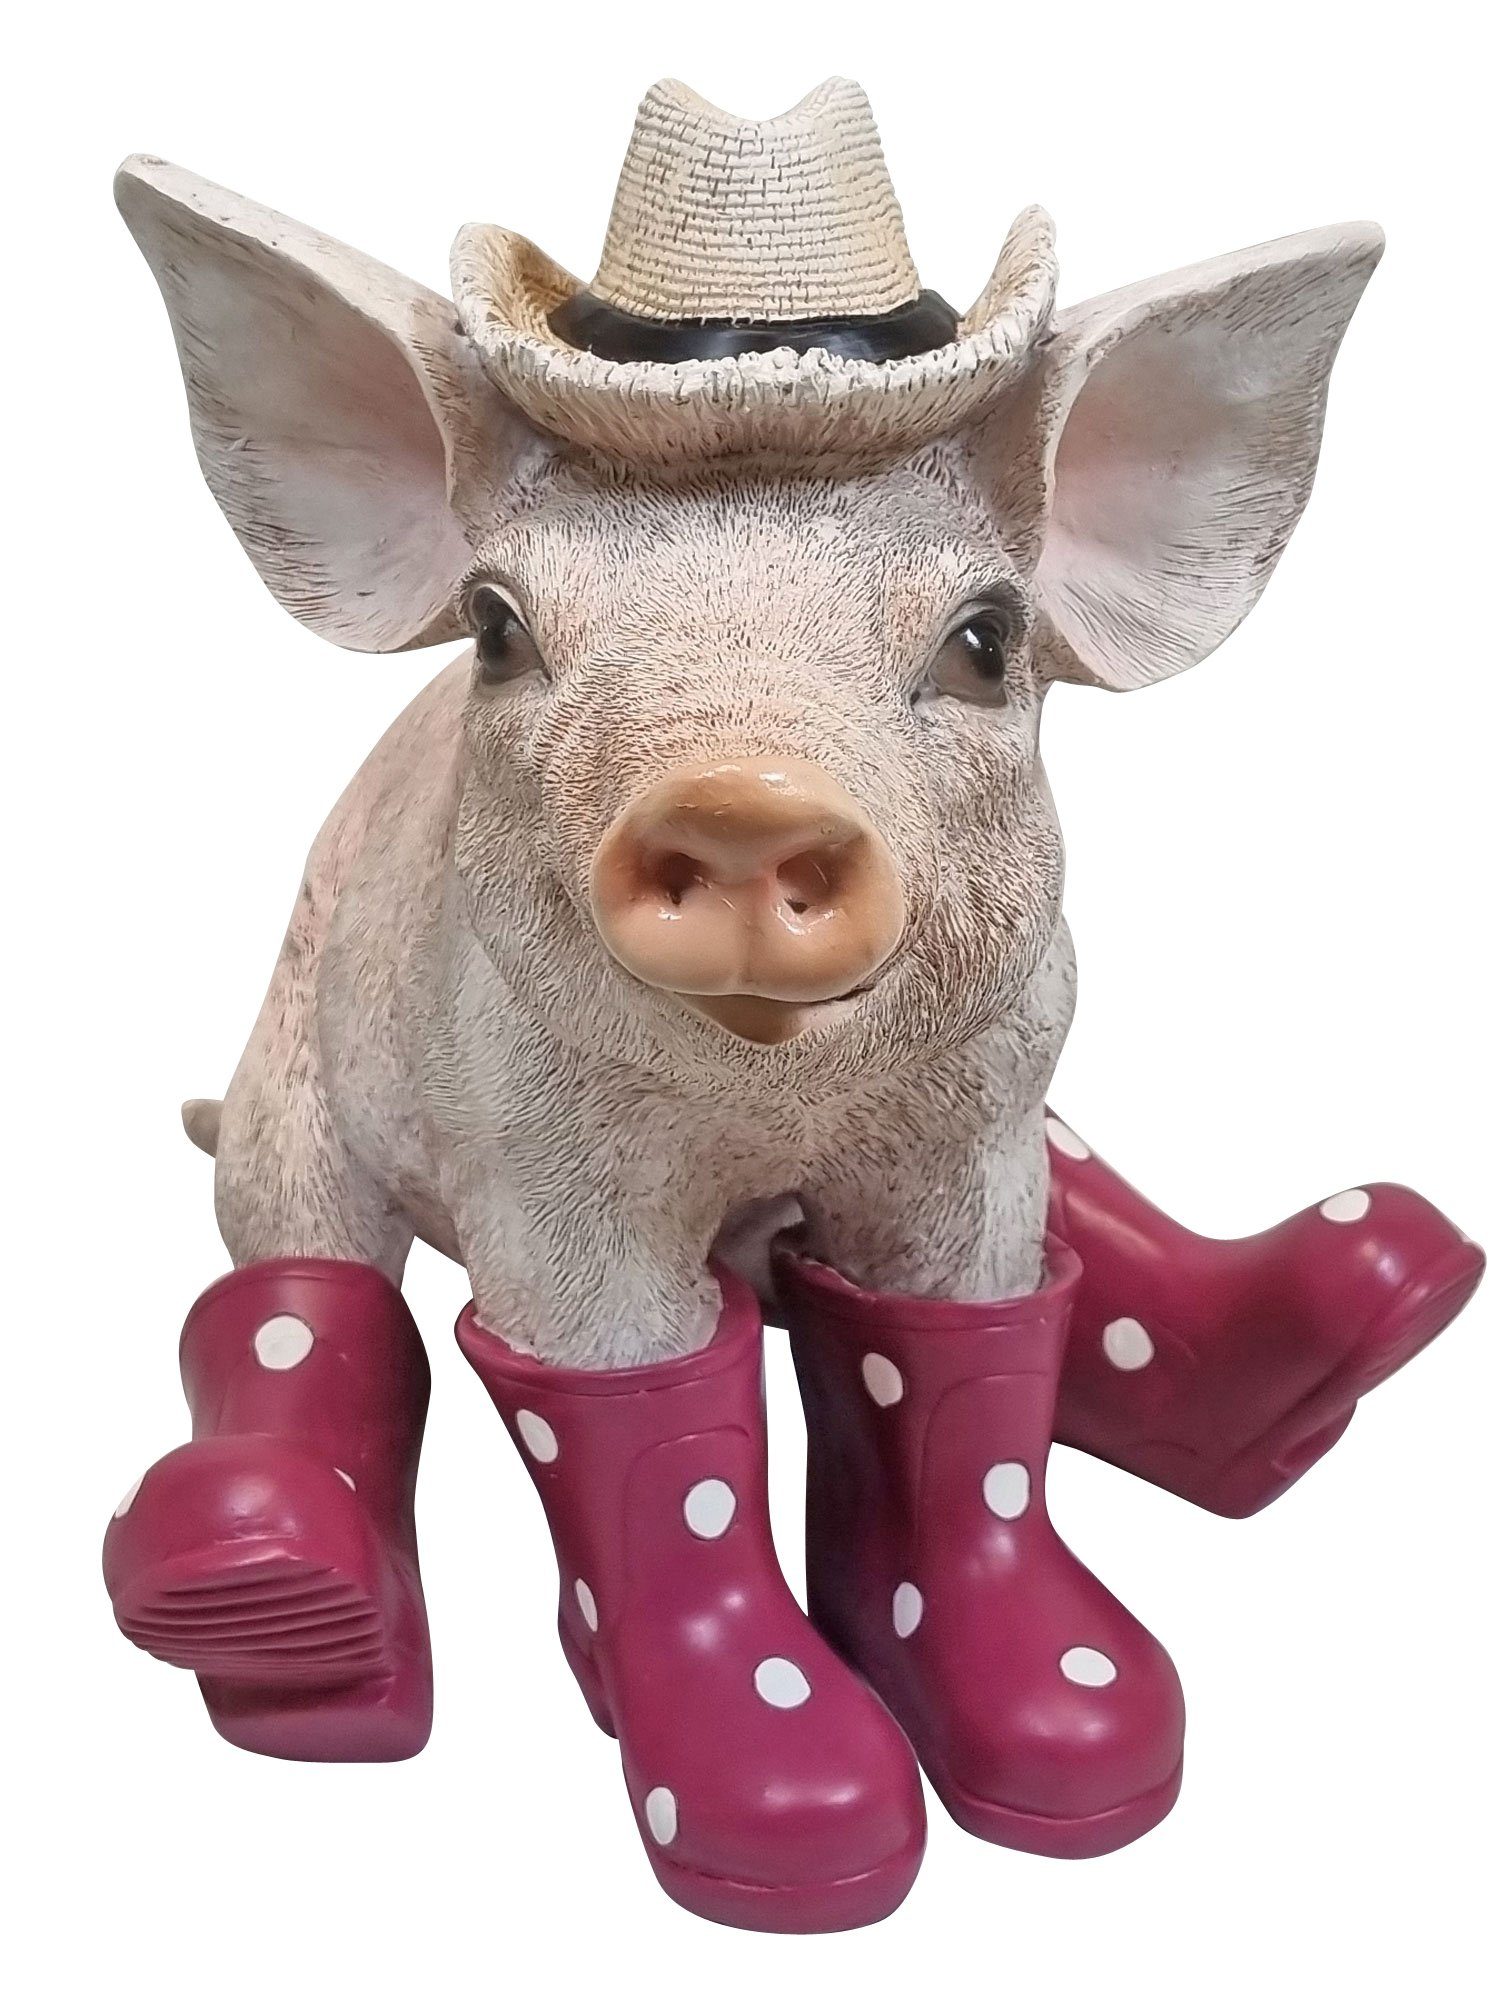 Fachhandel Plus Gartenfigur Schwein mit Hut und Gummistiefel in brombeer, (1 St), lustige Tierfigur, Indoor, Outdoor | Figuren